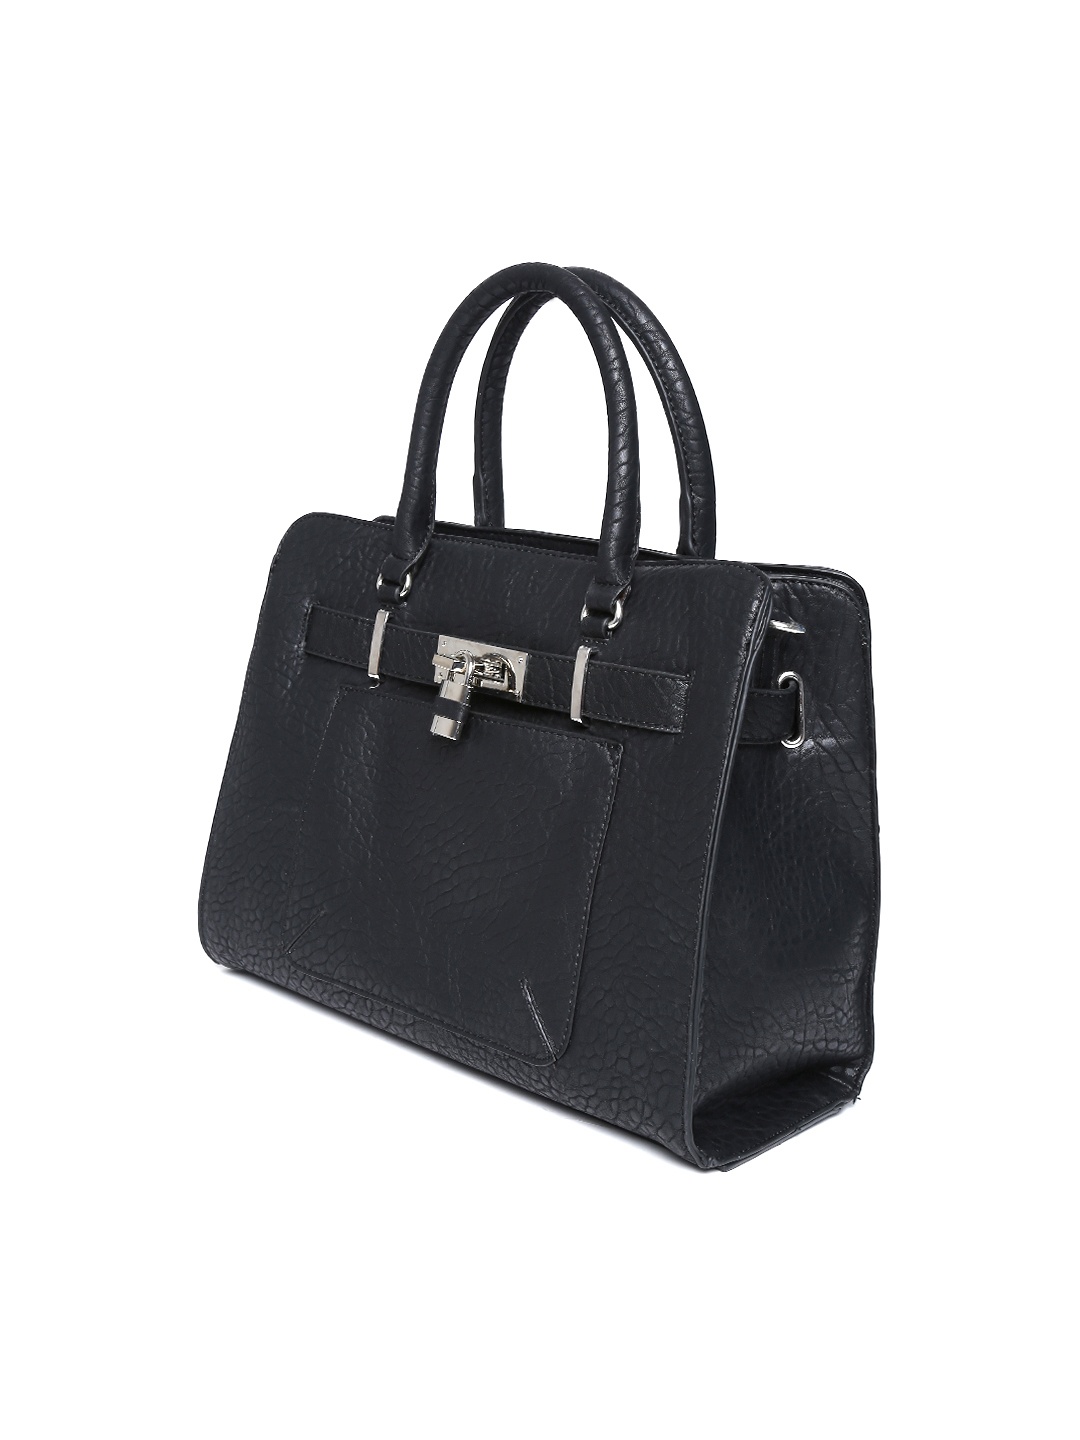 Myntra Parfois Black Handbag 639686 | Buy Myntra Parfois Handbags at ...